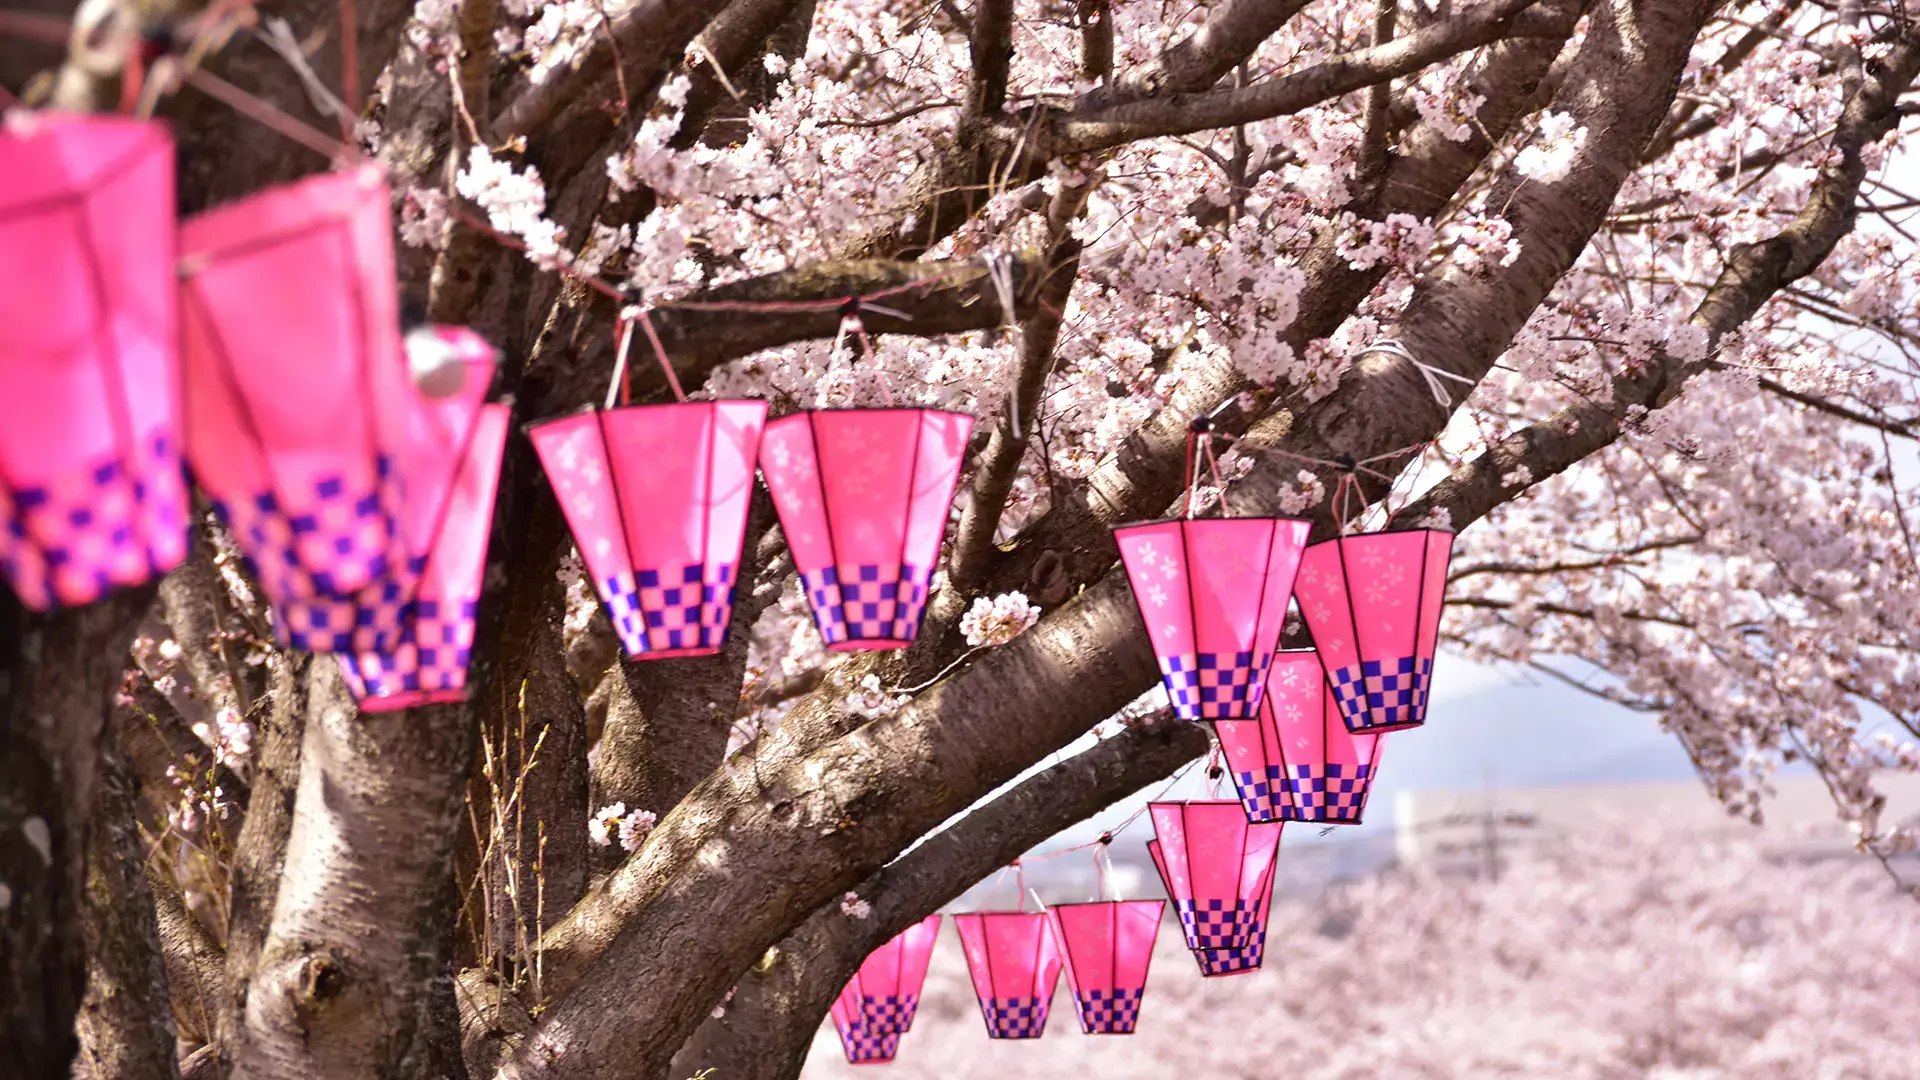 What is the True Meaning of Japan's Sakura Cherry Blossom? - Sakuraco